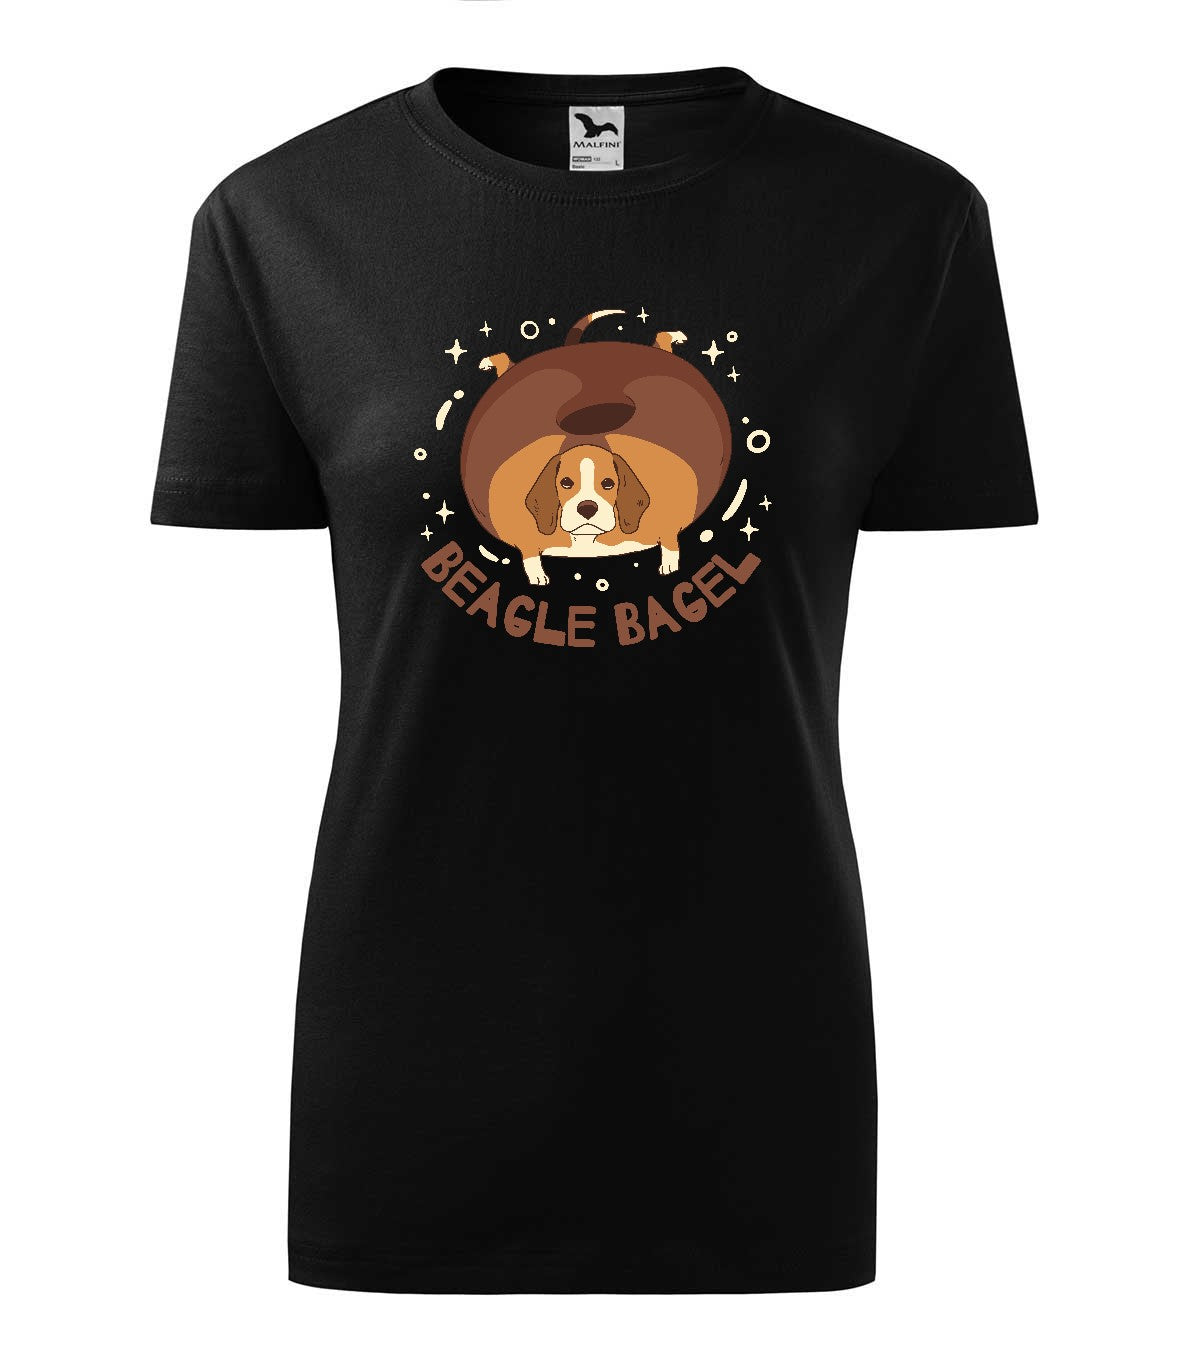 Beagle Bagel női technikai póló